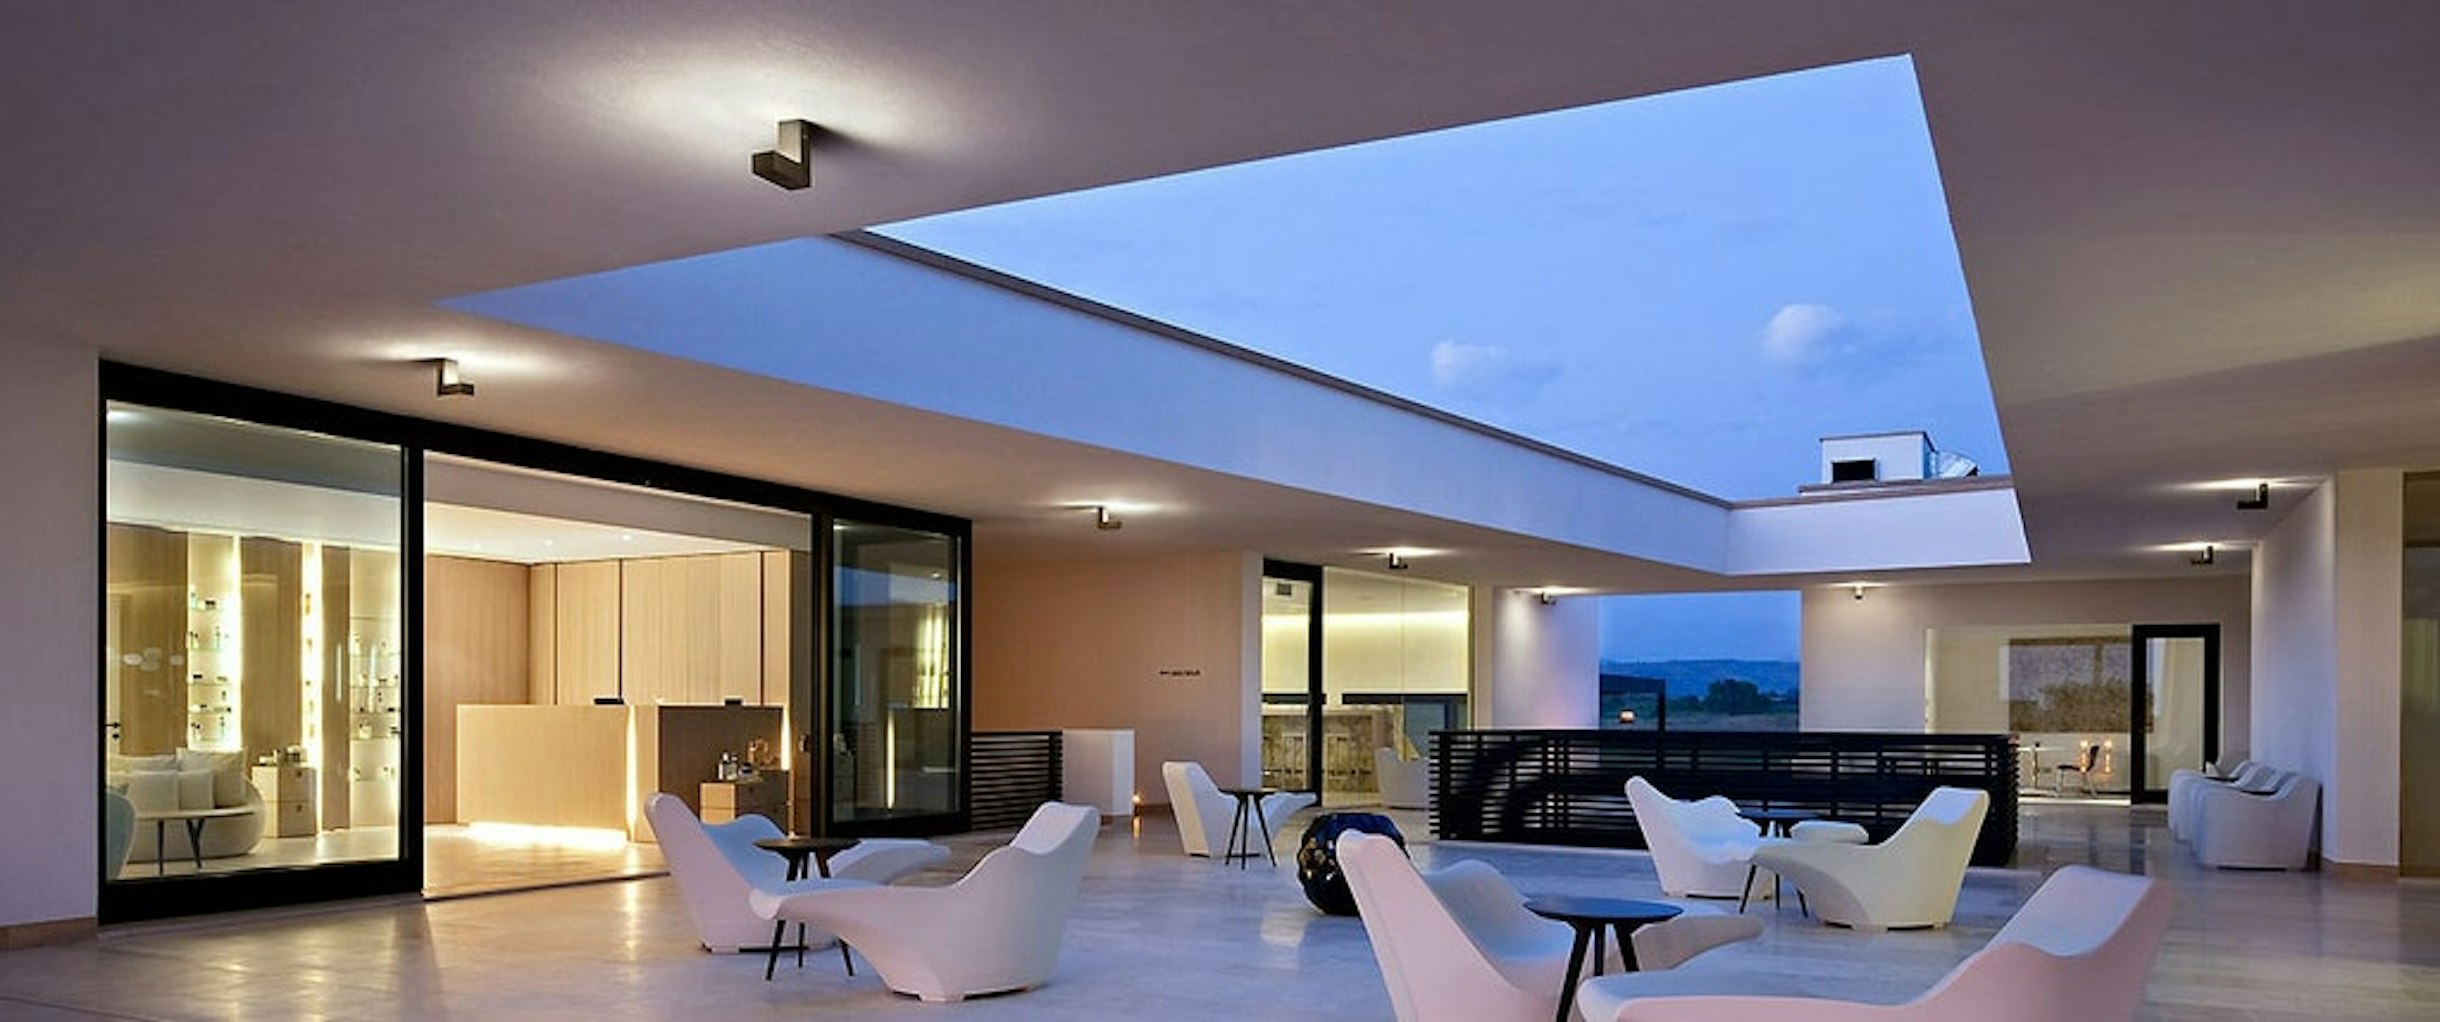 hospitality-roccoforte-resort-sciacca-flos-07-1440x603